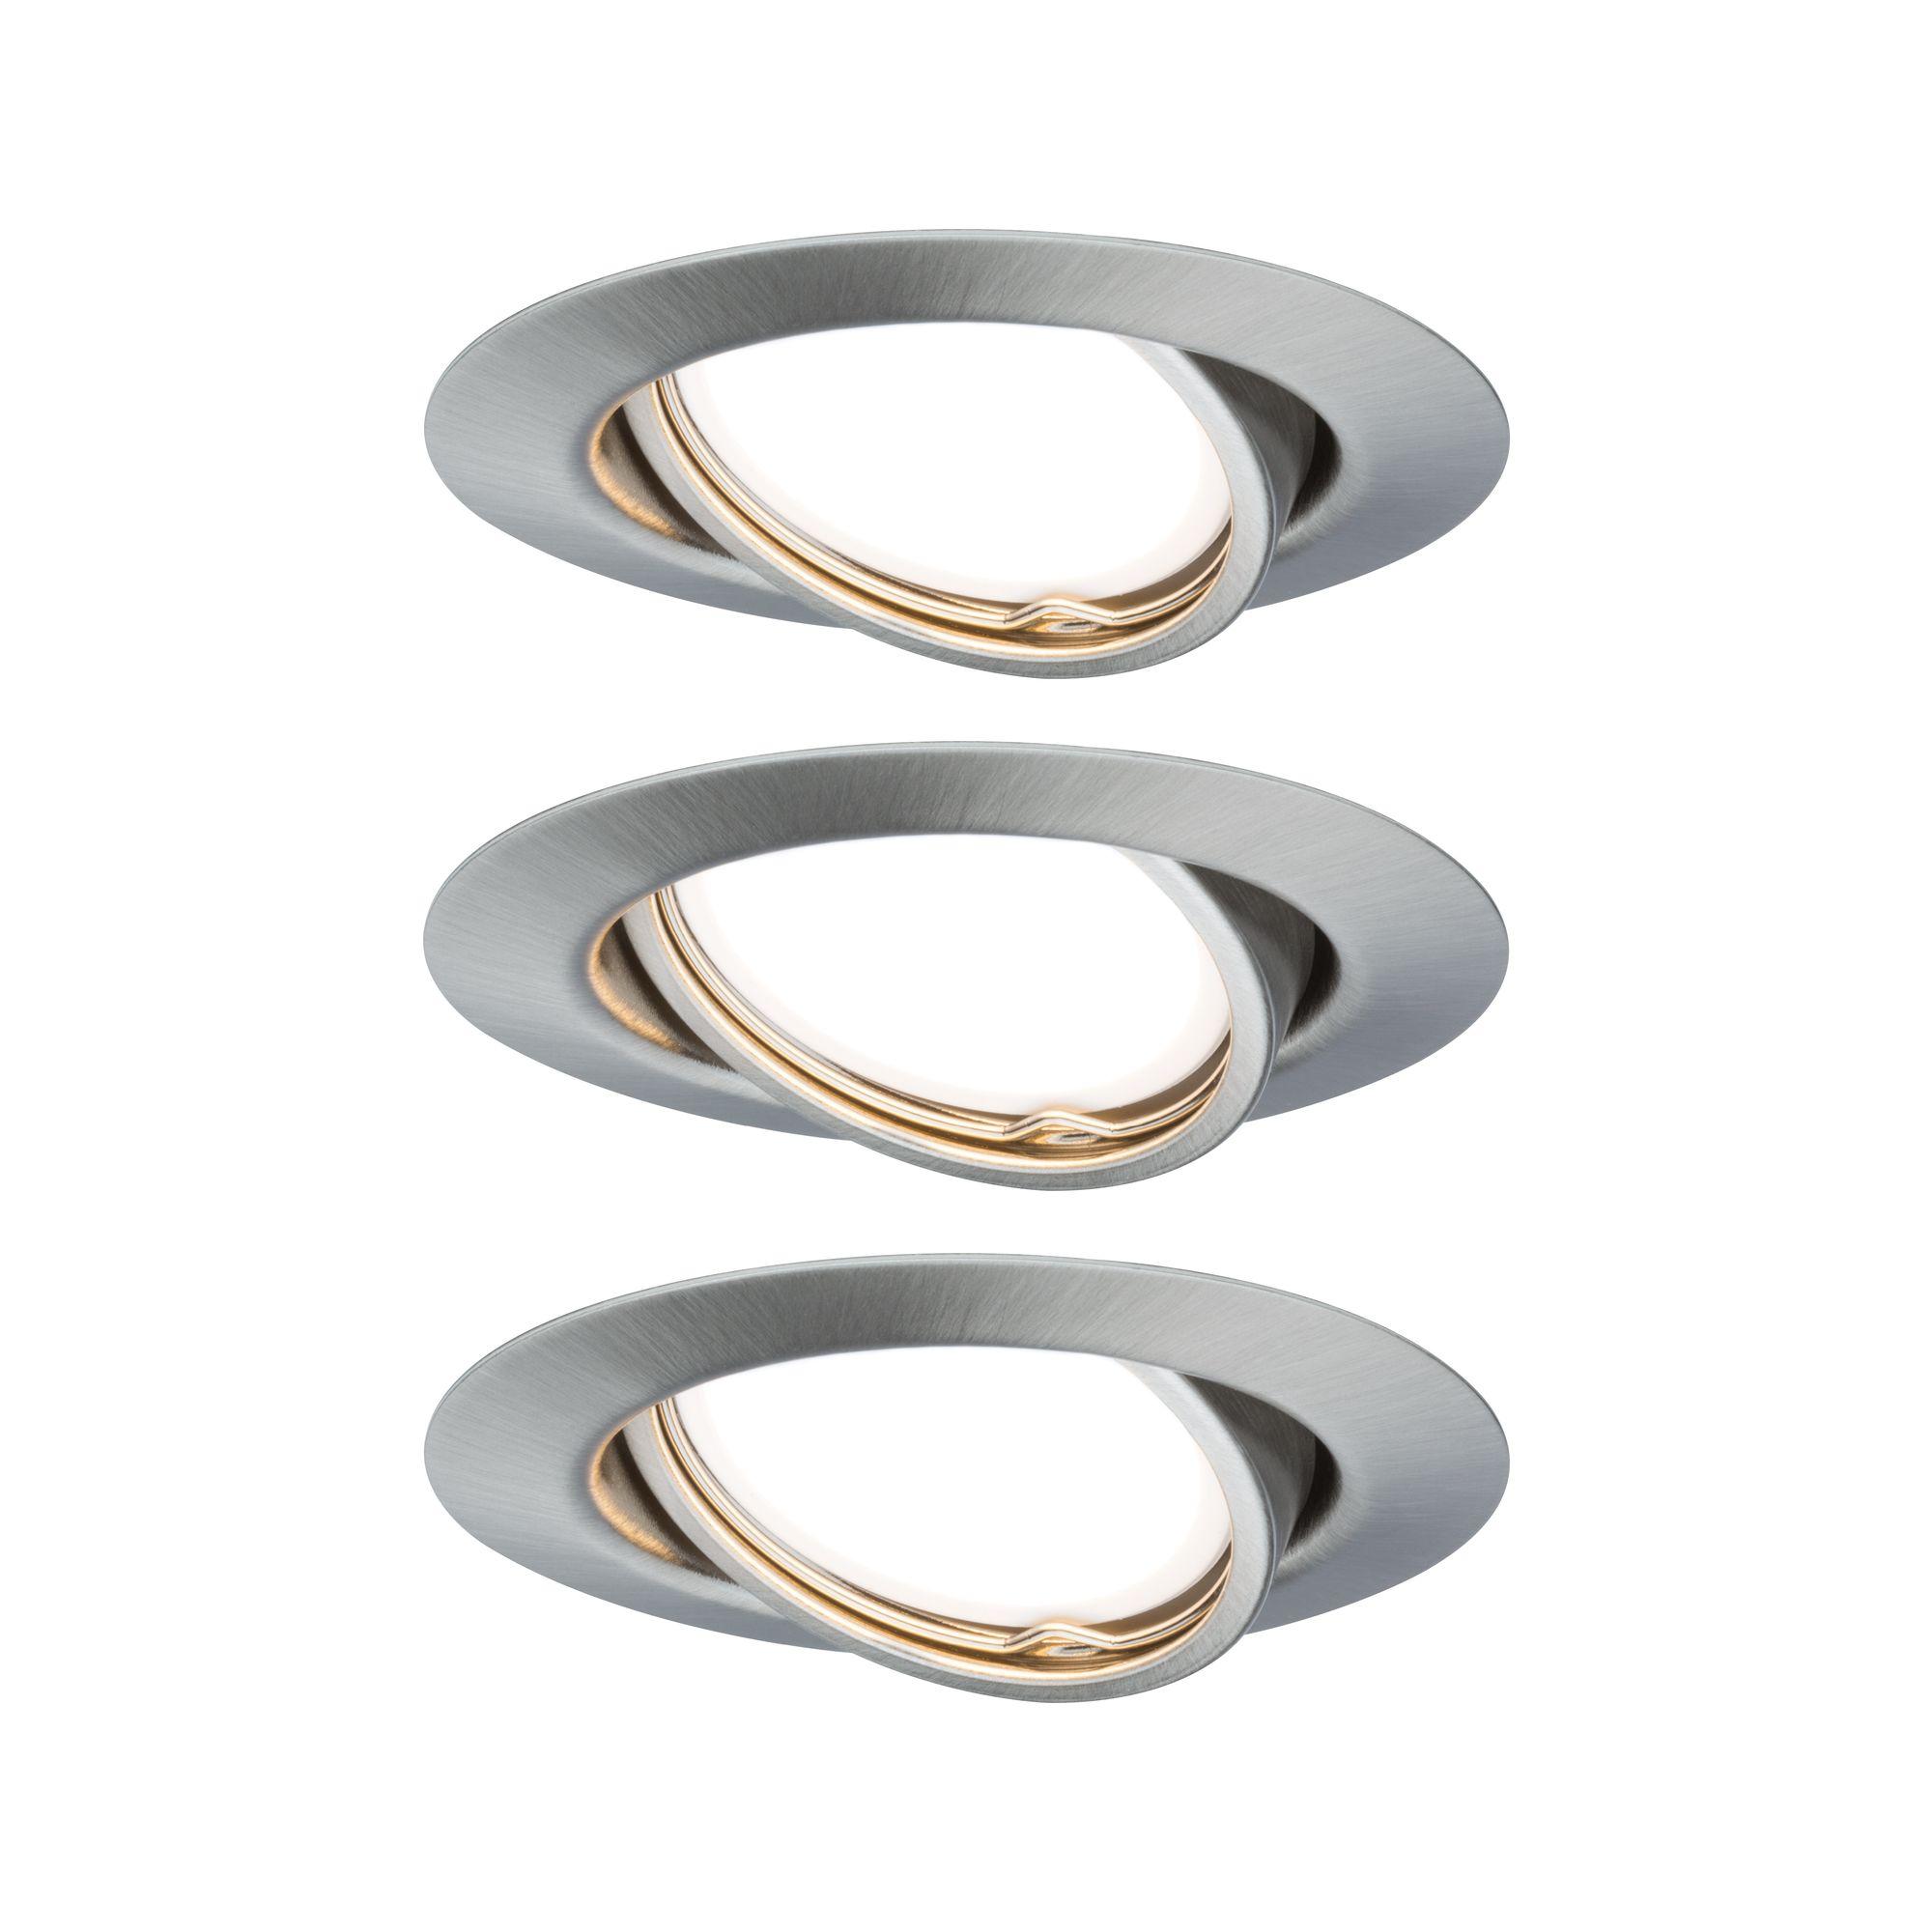 Vestavné svítidlo LED Base kruhové 3x5W GU10 kov kartáčovaný nastavitelné 3-krokové-stmívatelné 934.24 - PAULMANN